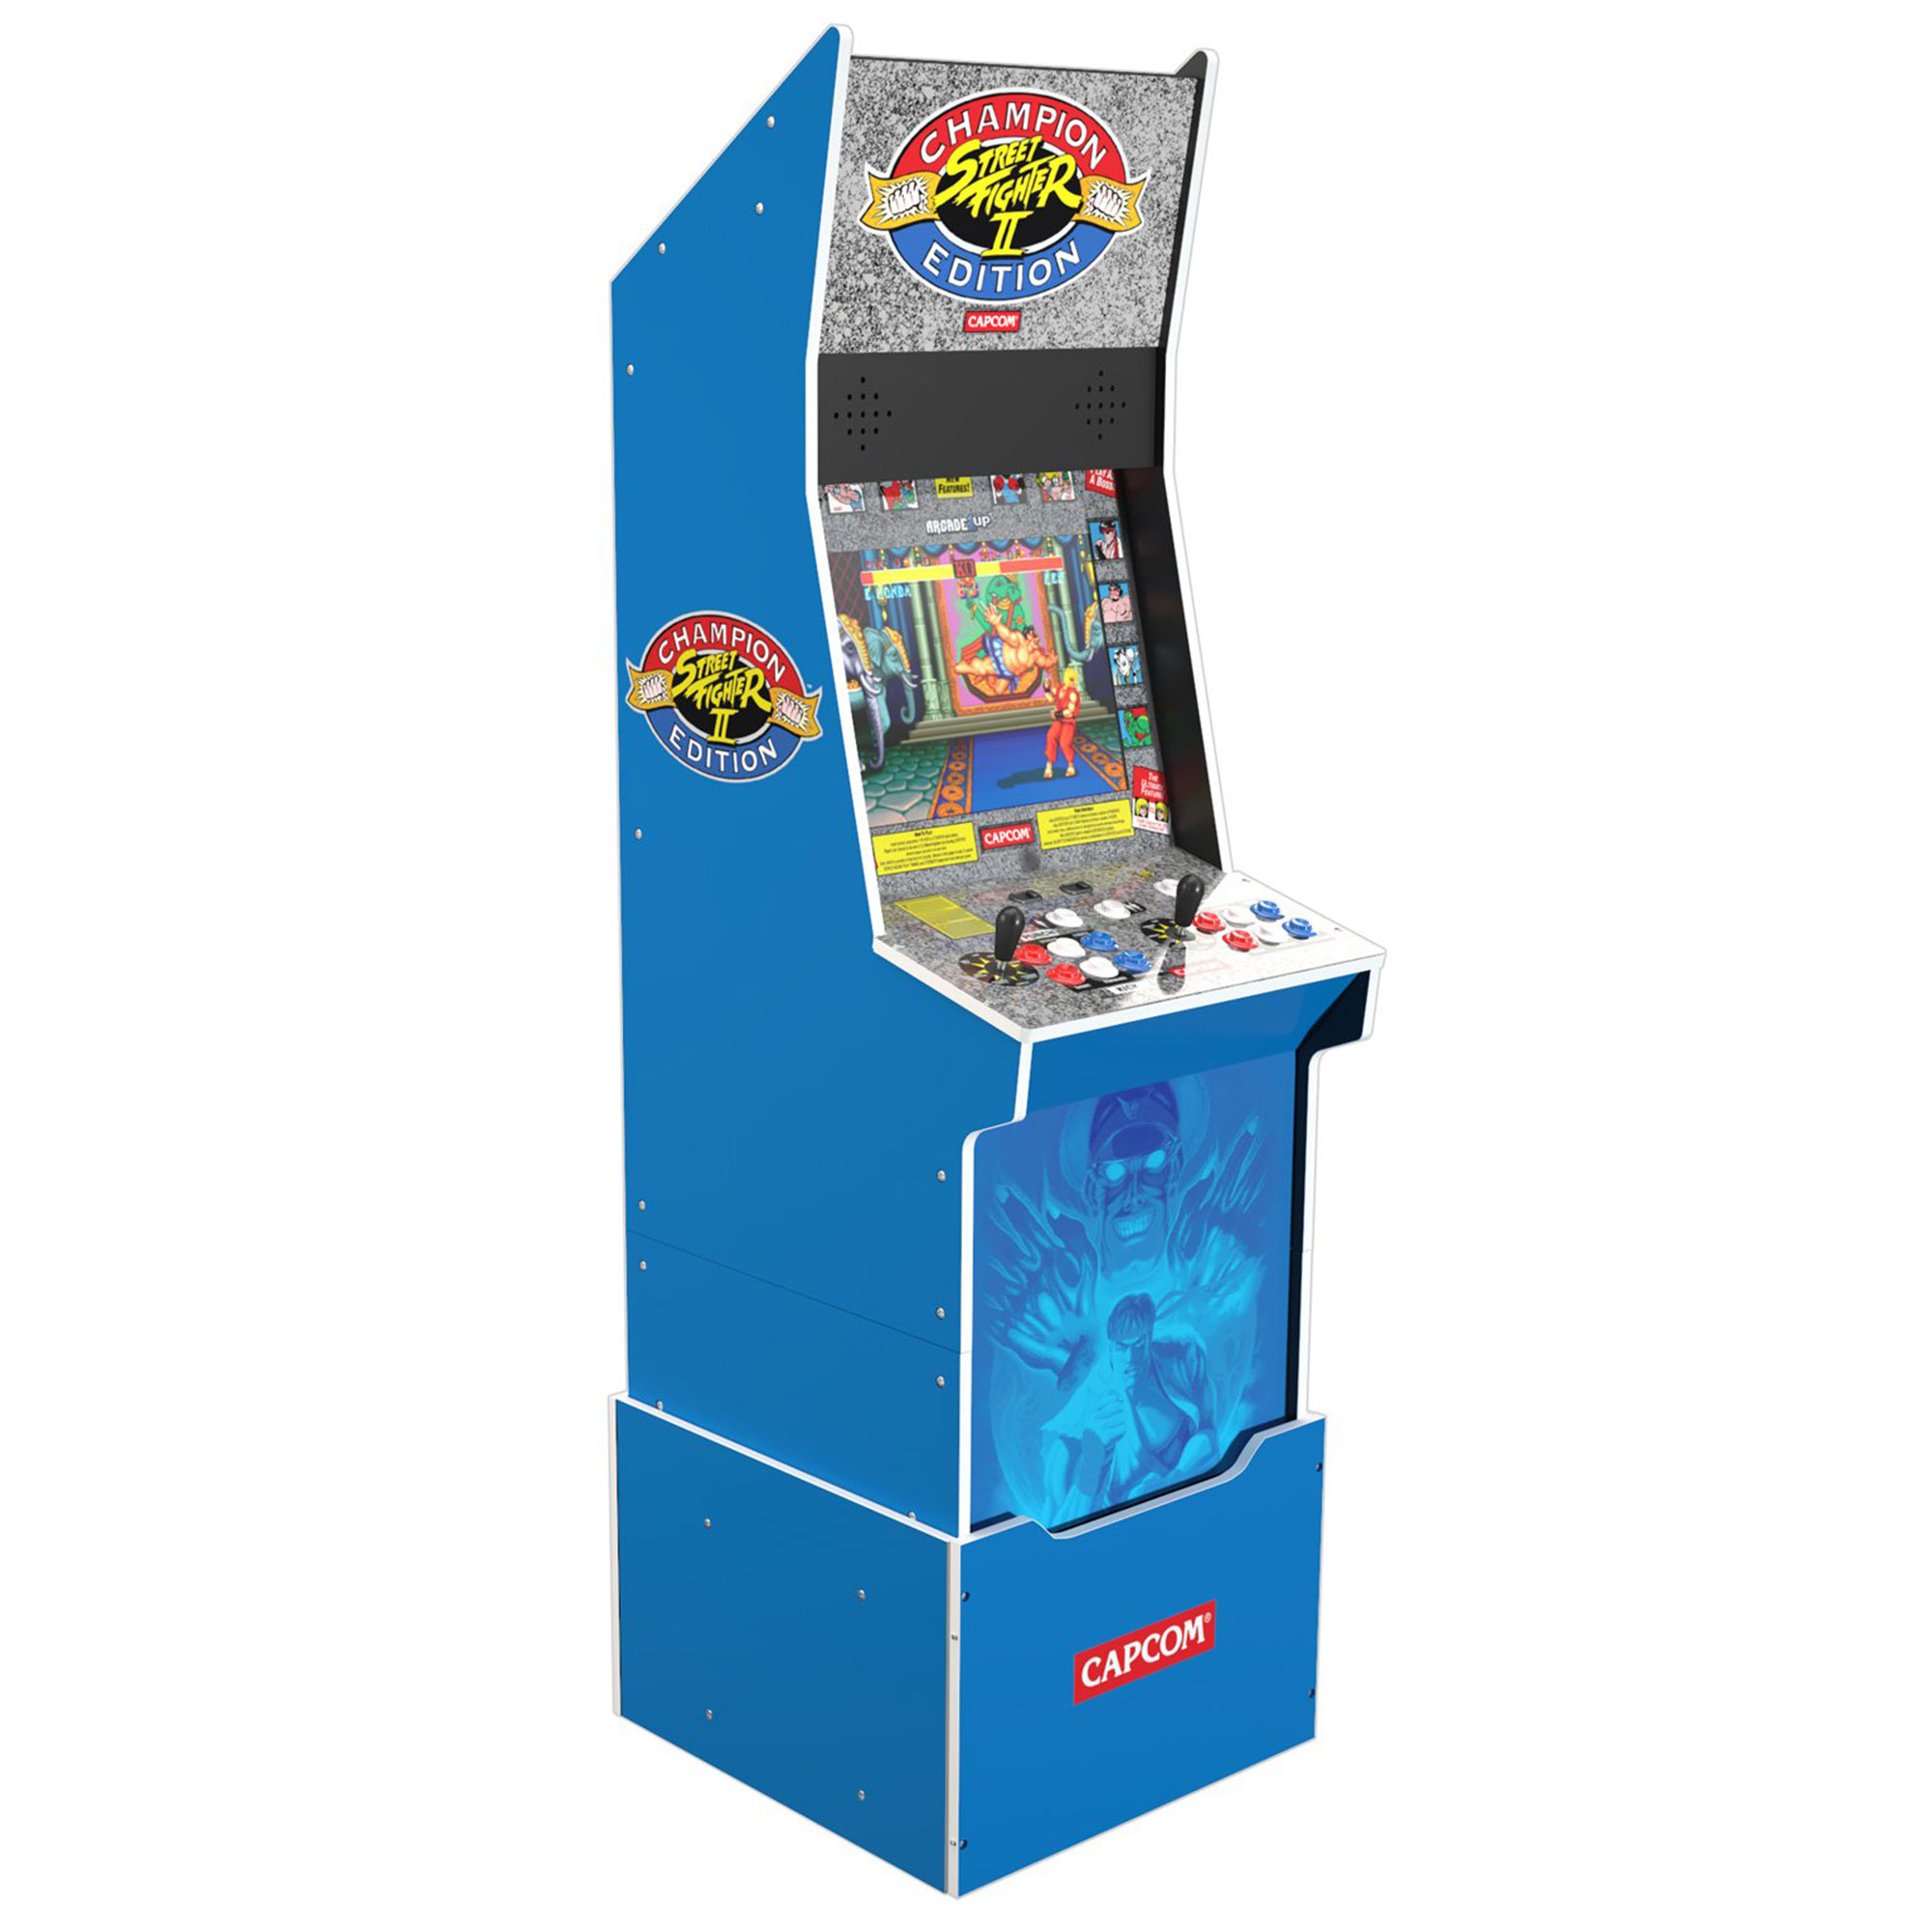 Arcade1Up Street Fighter II Champion Edition Big Blue Arcade Machine with Stool - image 2 of 8